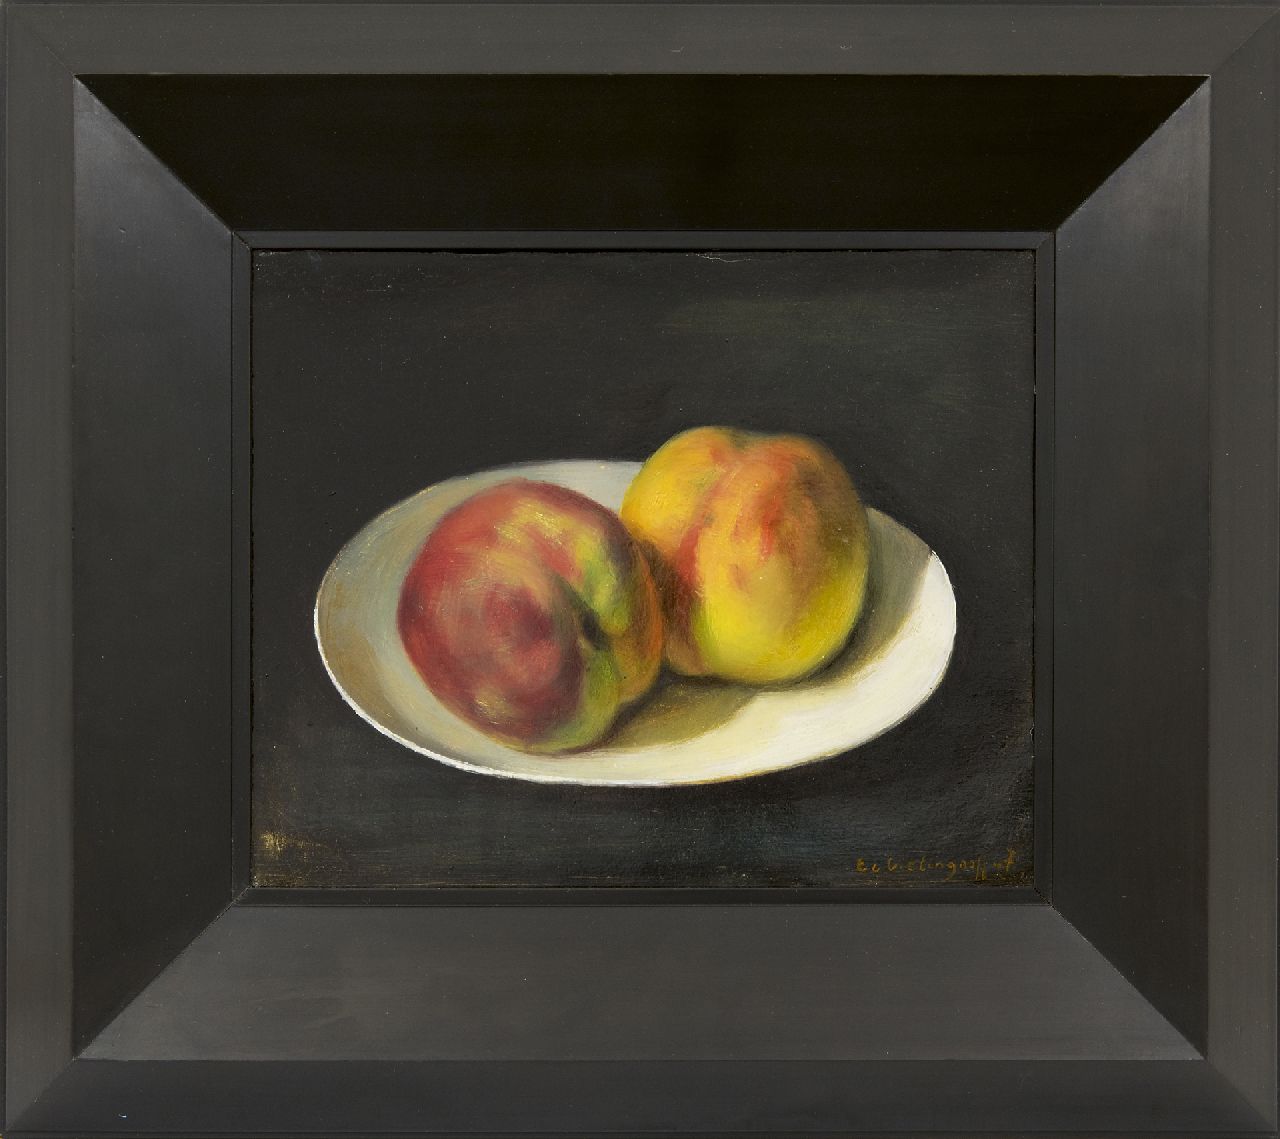 Vietinghoff E.A.A. von | Egon Arnold Alexis von Vietinghoff, Peaches, oil on canvas 22.1 x 27.1 cm, signed l.r. and painted '47